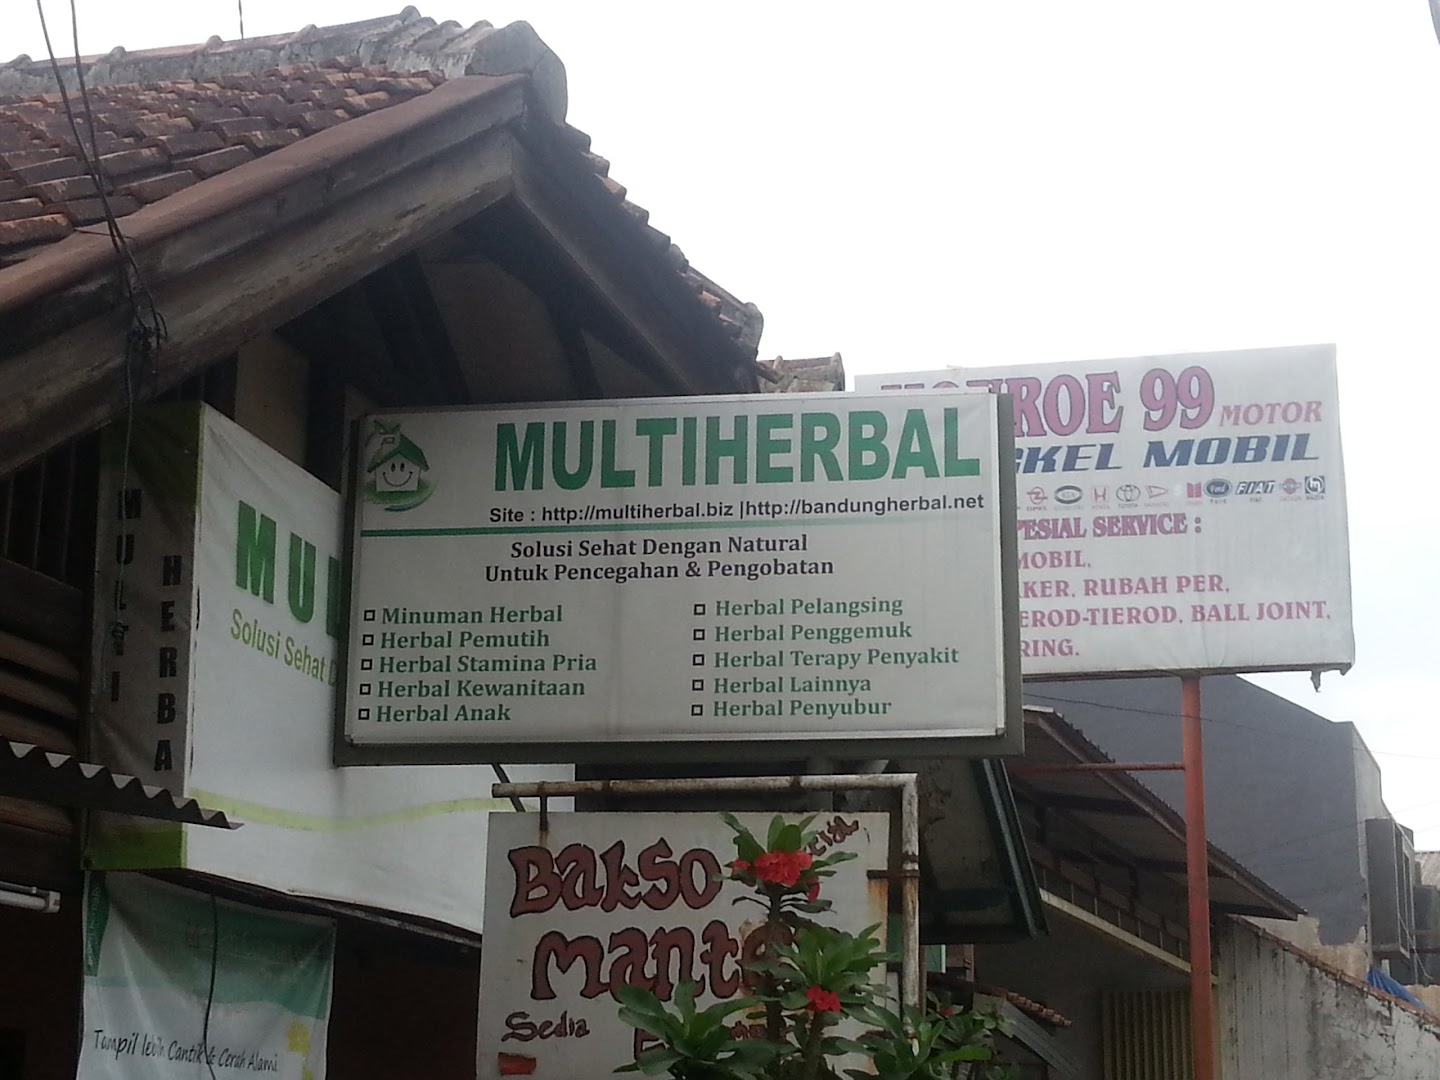 Gambar Multiherbal.id - Madu Bajakah Borneo, Madu Hijau, Madu Gurah Almahera, Madu Angkak, Qusthul Hindi Dan Herbal Lainnya